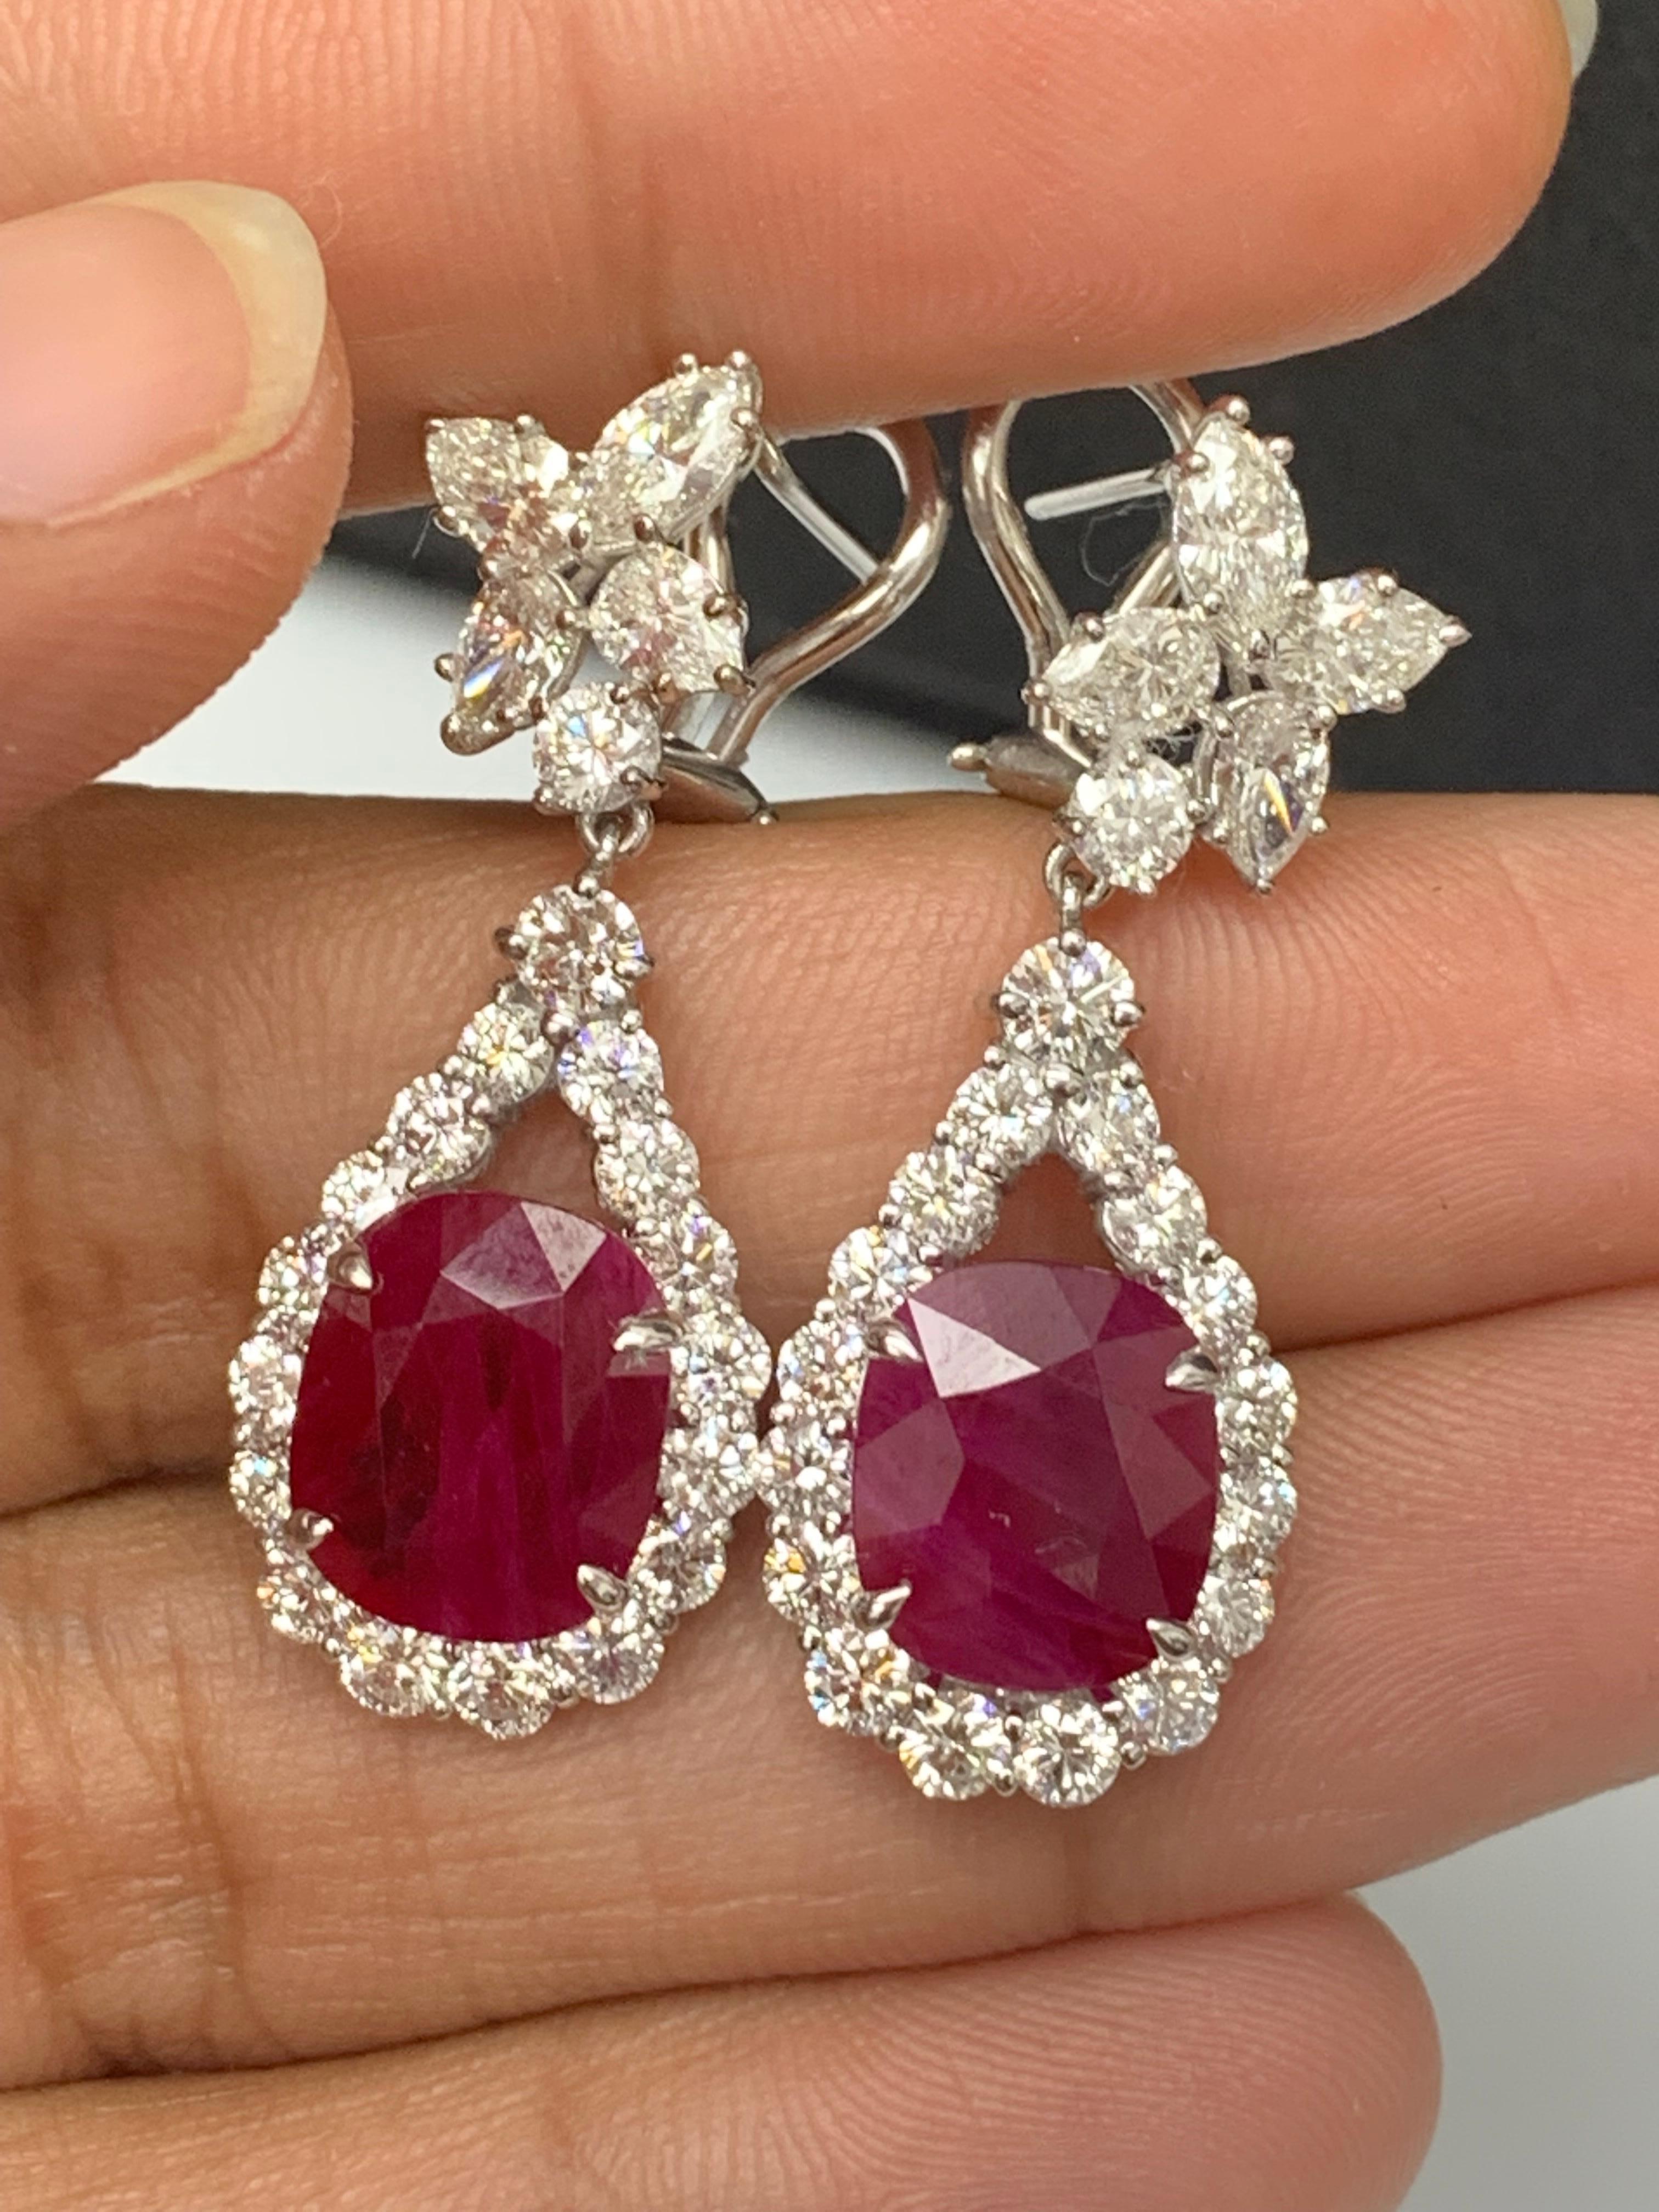 Certified 10.18 Carat Burma Ruby and Diamond Drop Earrings in 18K White Gold For Sale 4